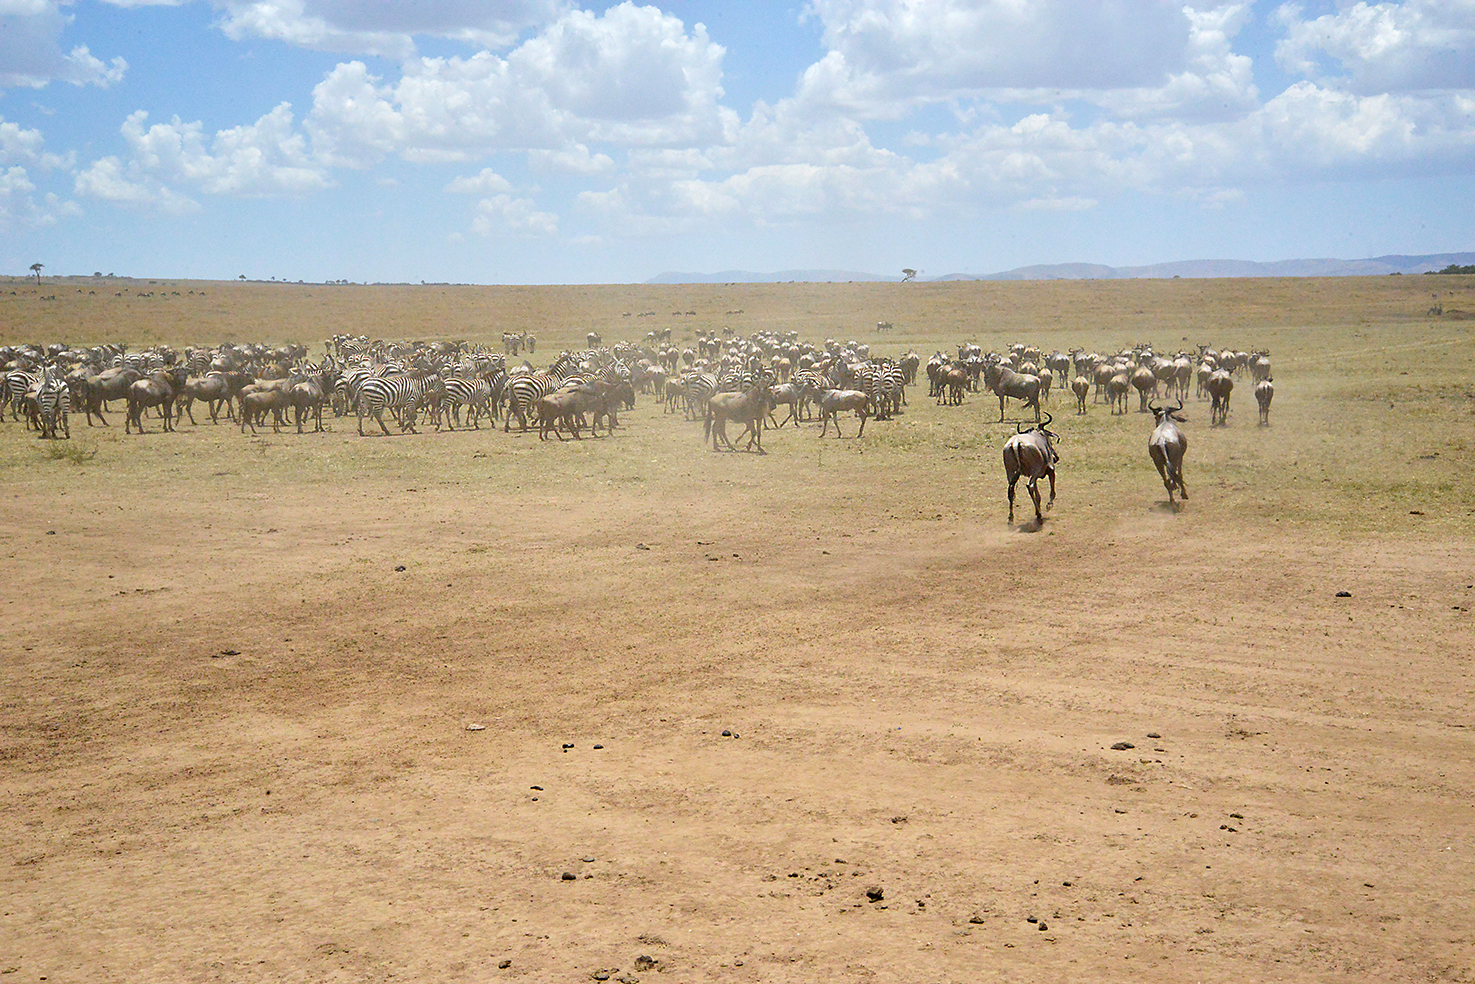 077 Masai Mara 2